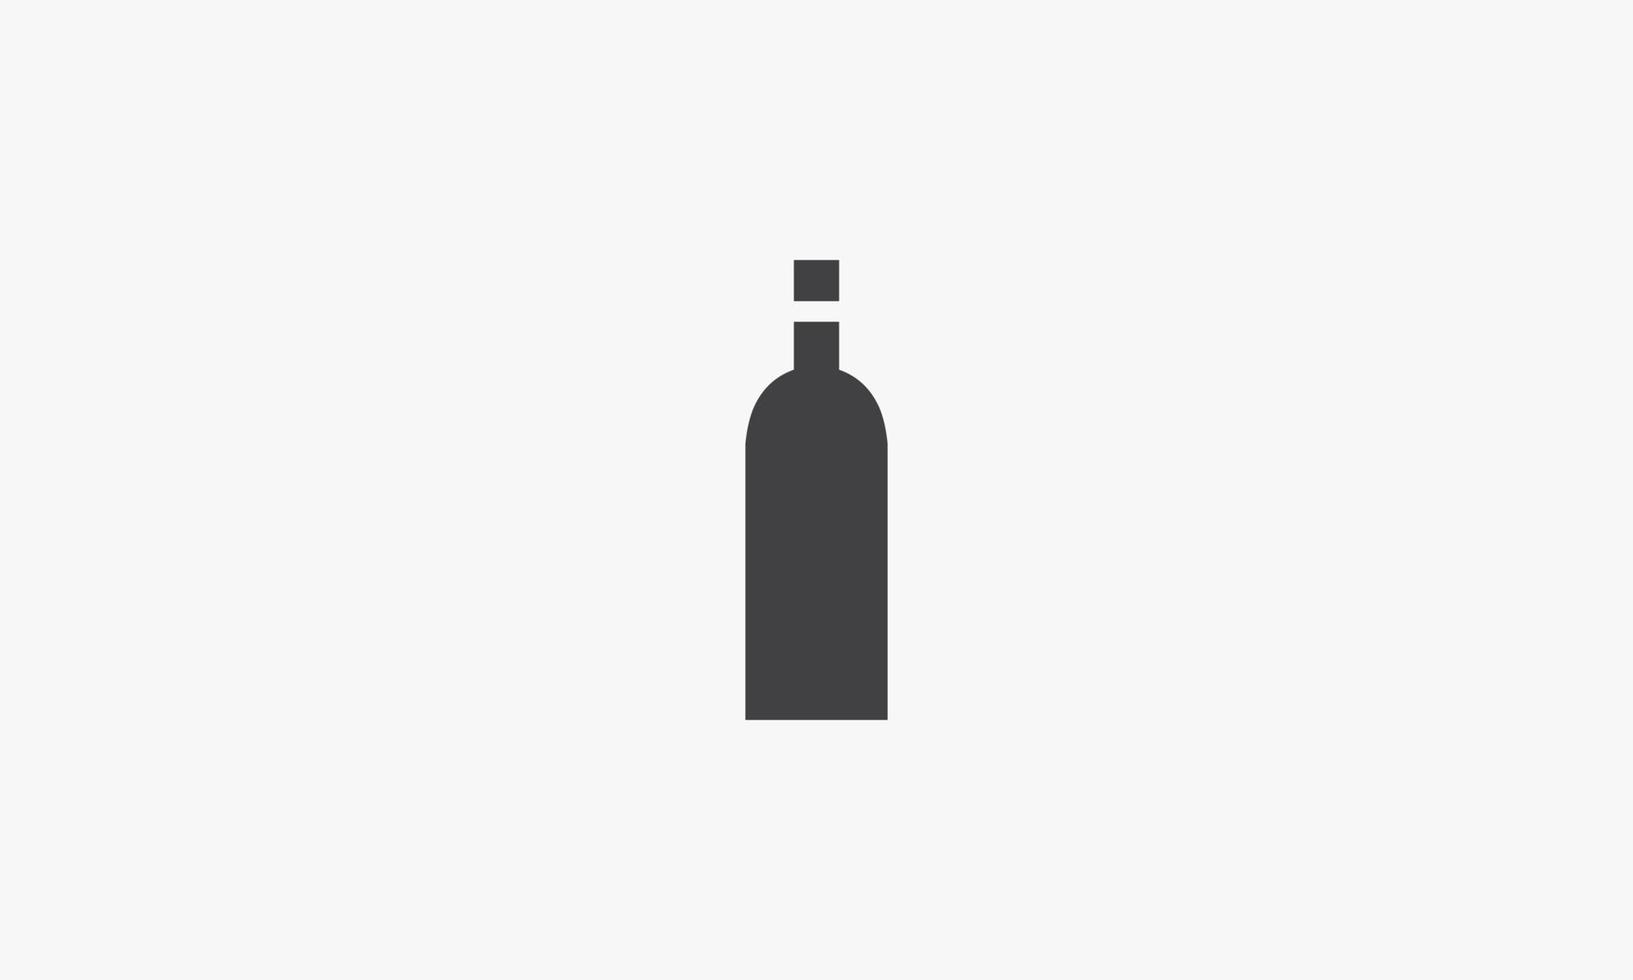 wine bottle icon design flat vector illustration. isolated on white background.